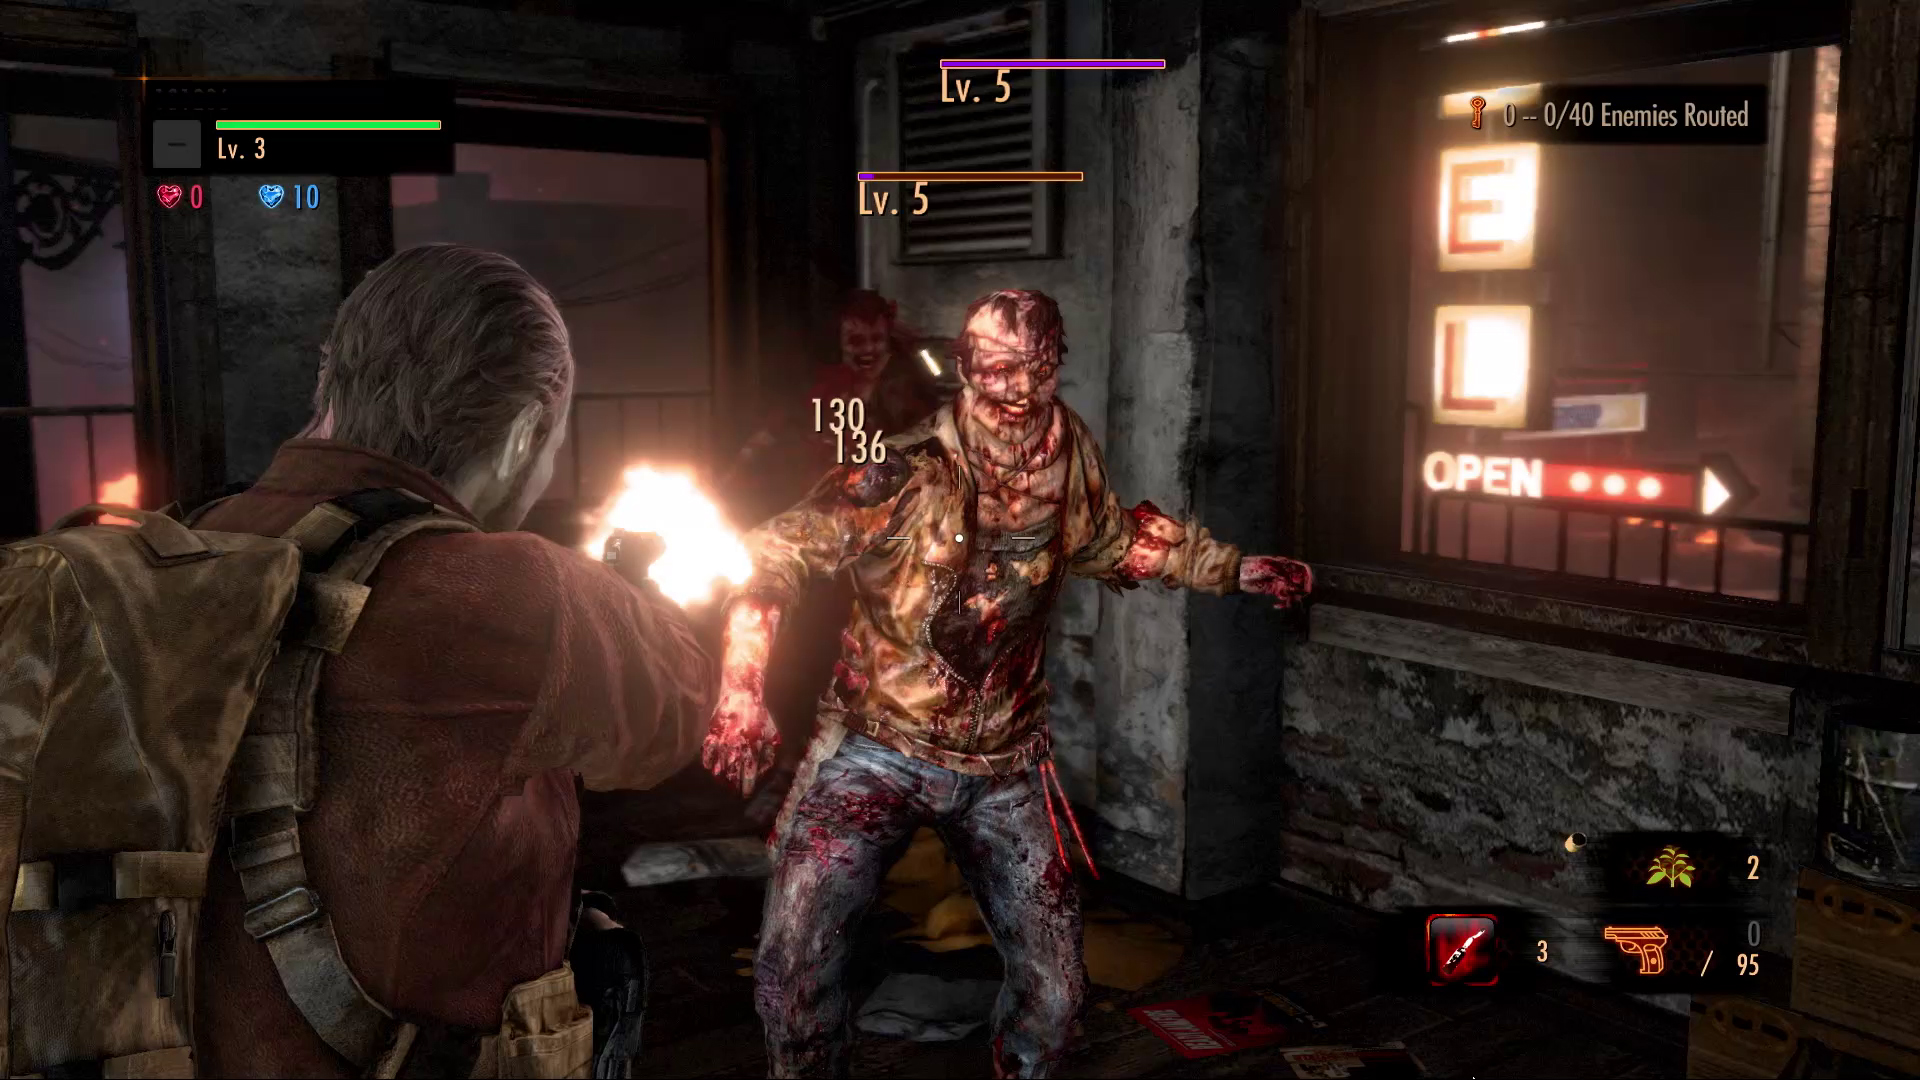 Resident Evil: Revelations 2 HD wallpapers, Desktop wallpaper - most viewed